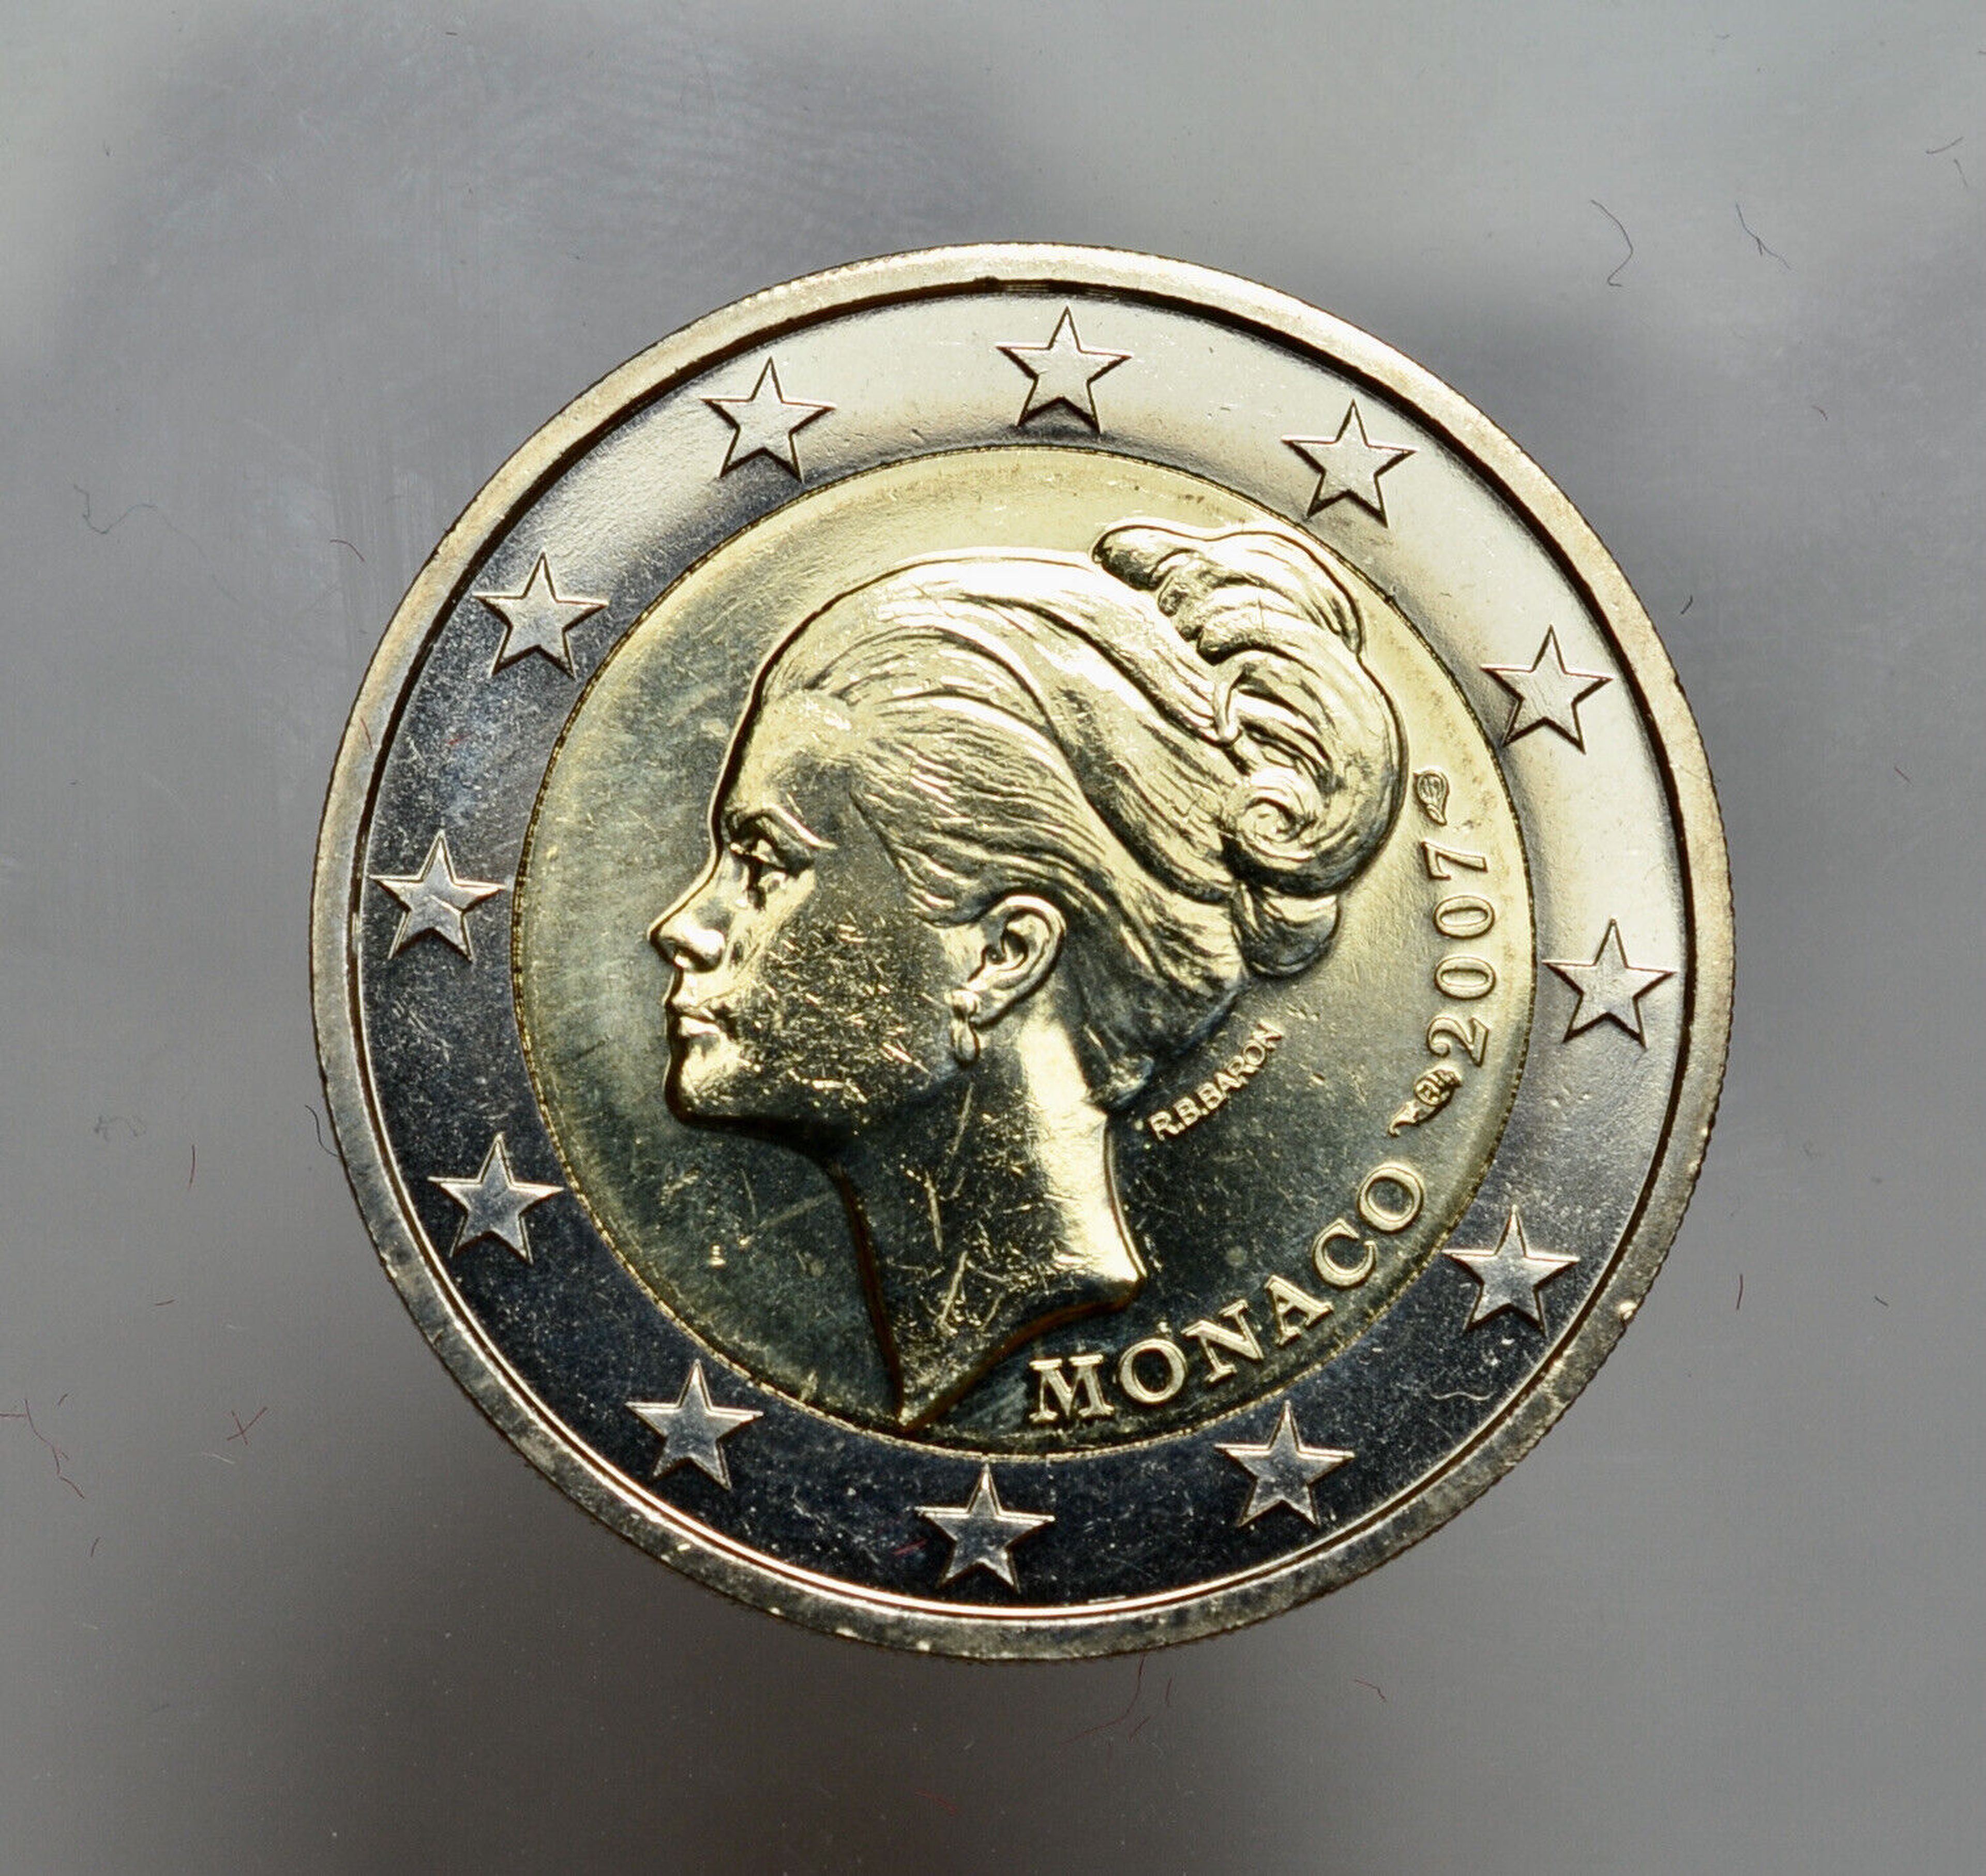 Moneda de 2 euros de Mónaco